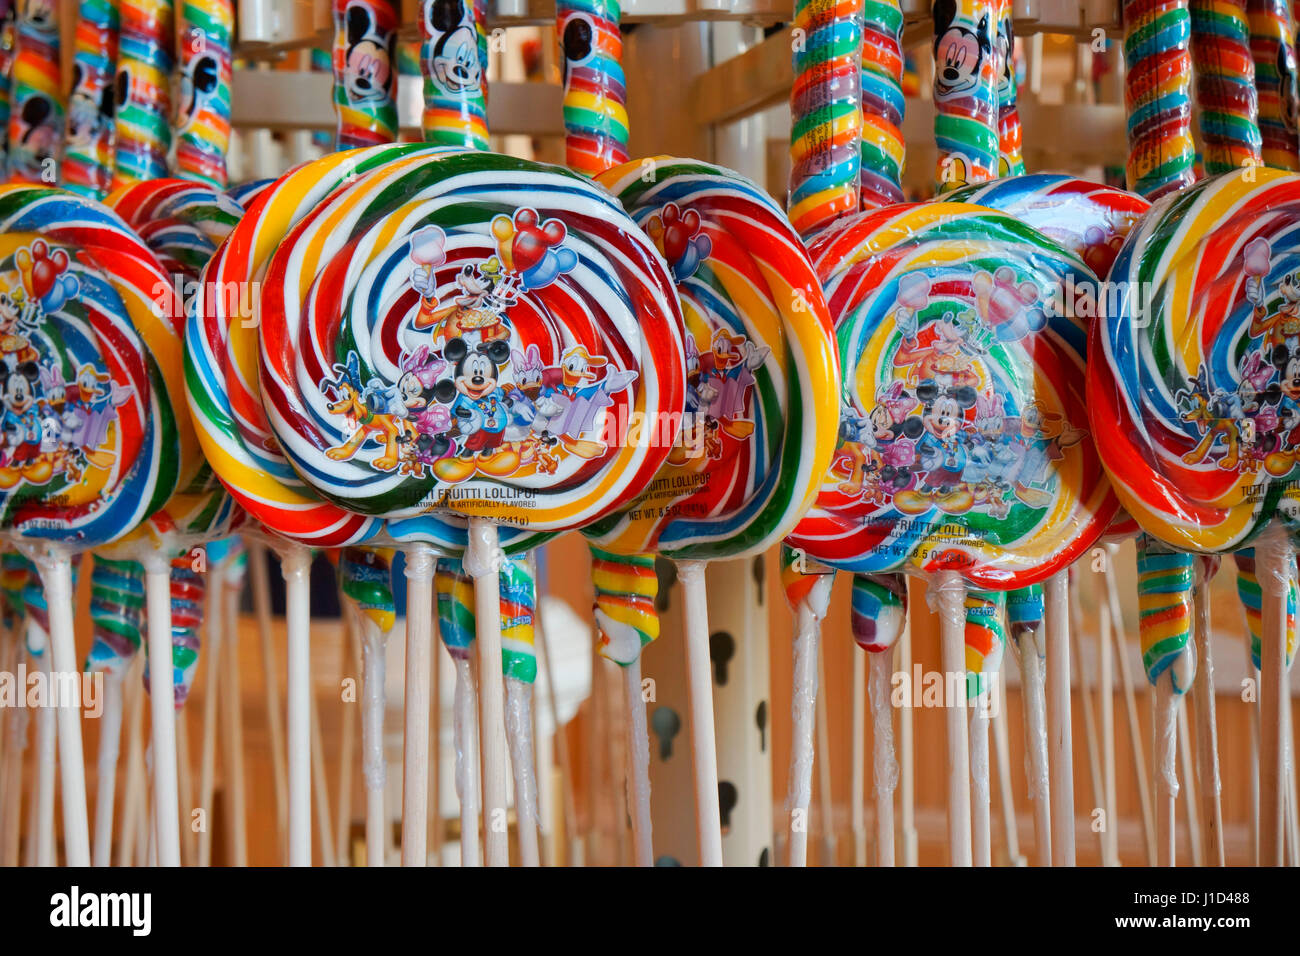 Disney Lollipops, Candy Candies Sweets at a Disney Store, Magic Kingdom, Disney World, Orlando Florida Stock Photo